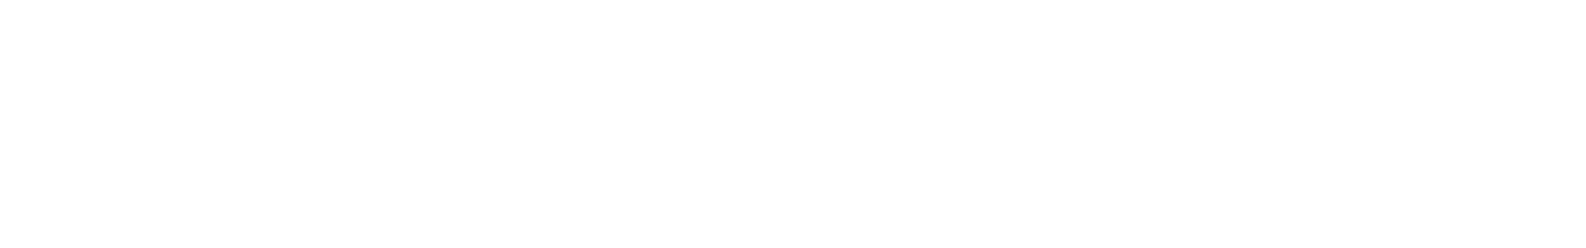 Air New Zealand
 Logo groß für dunkle Hintergründe (transparentes PNG)